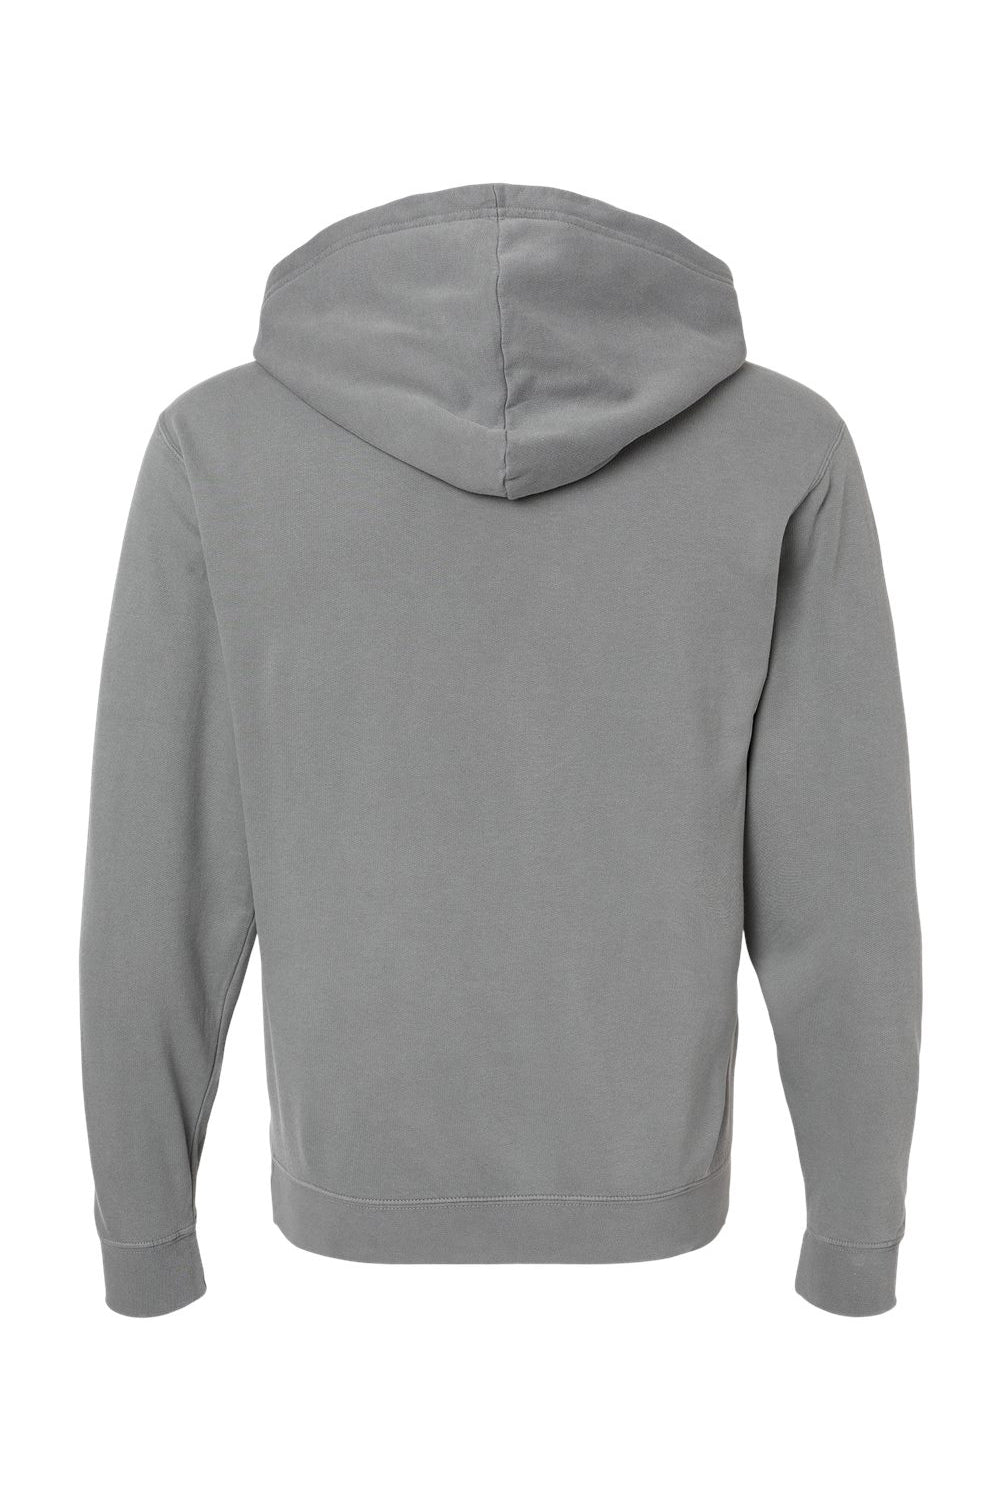 Comfort Colors 1467 Mens Garment Dyed Fleece Hooded Sweatshirt Hoodie Grey Flat Back